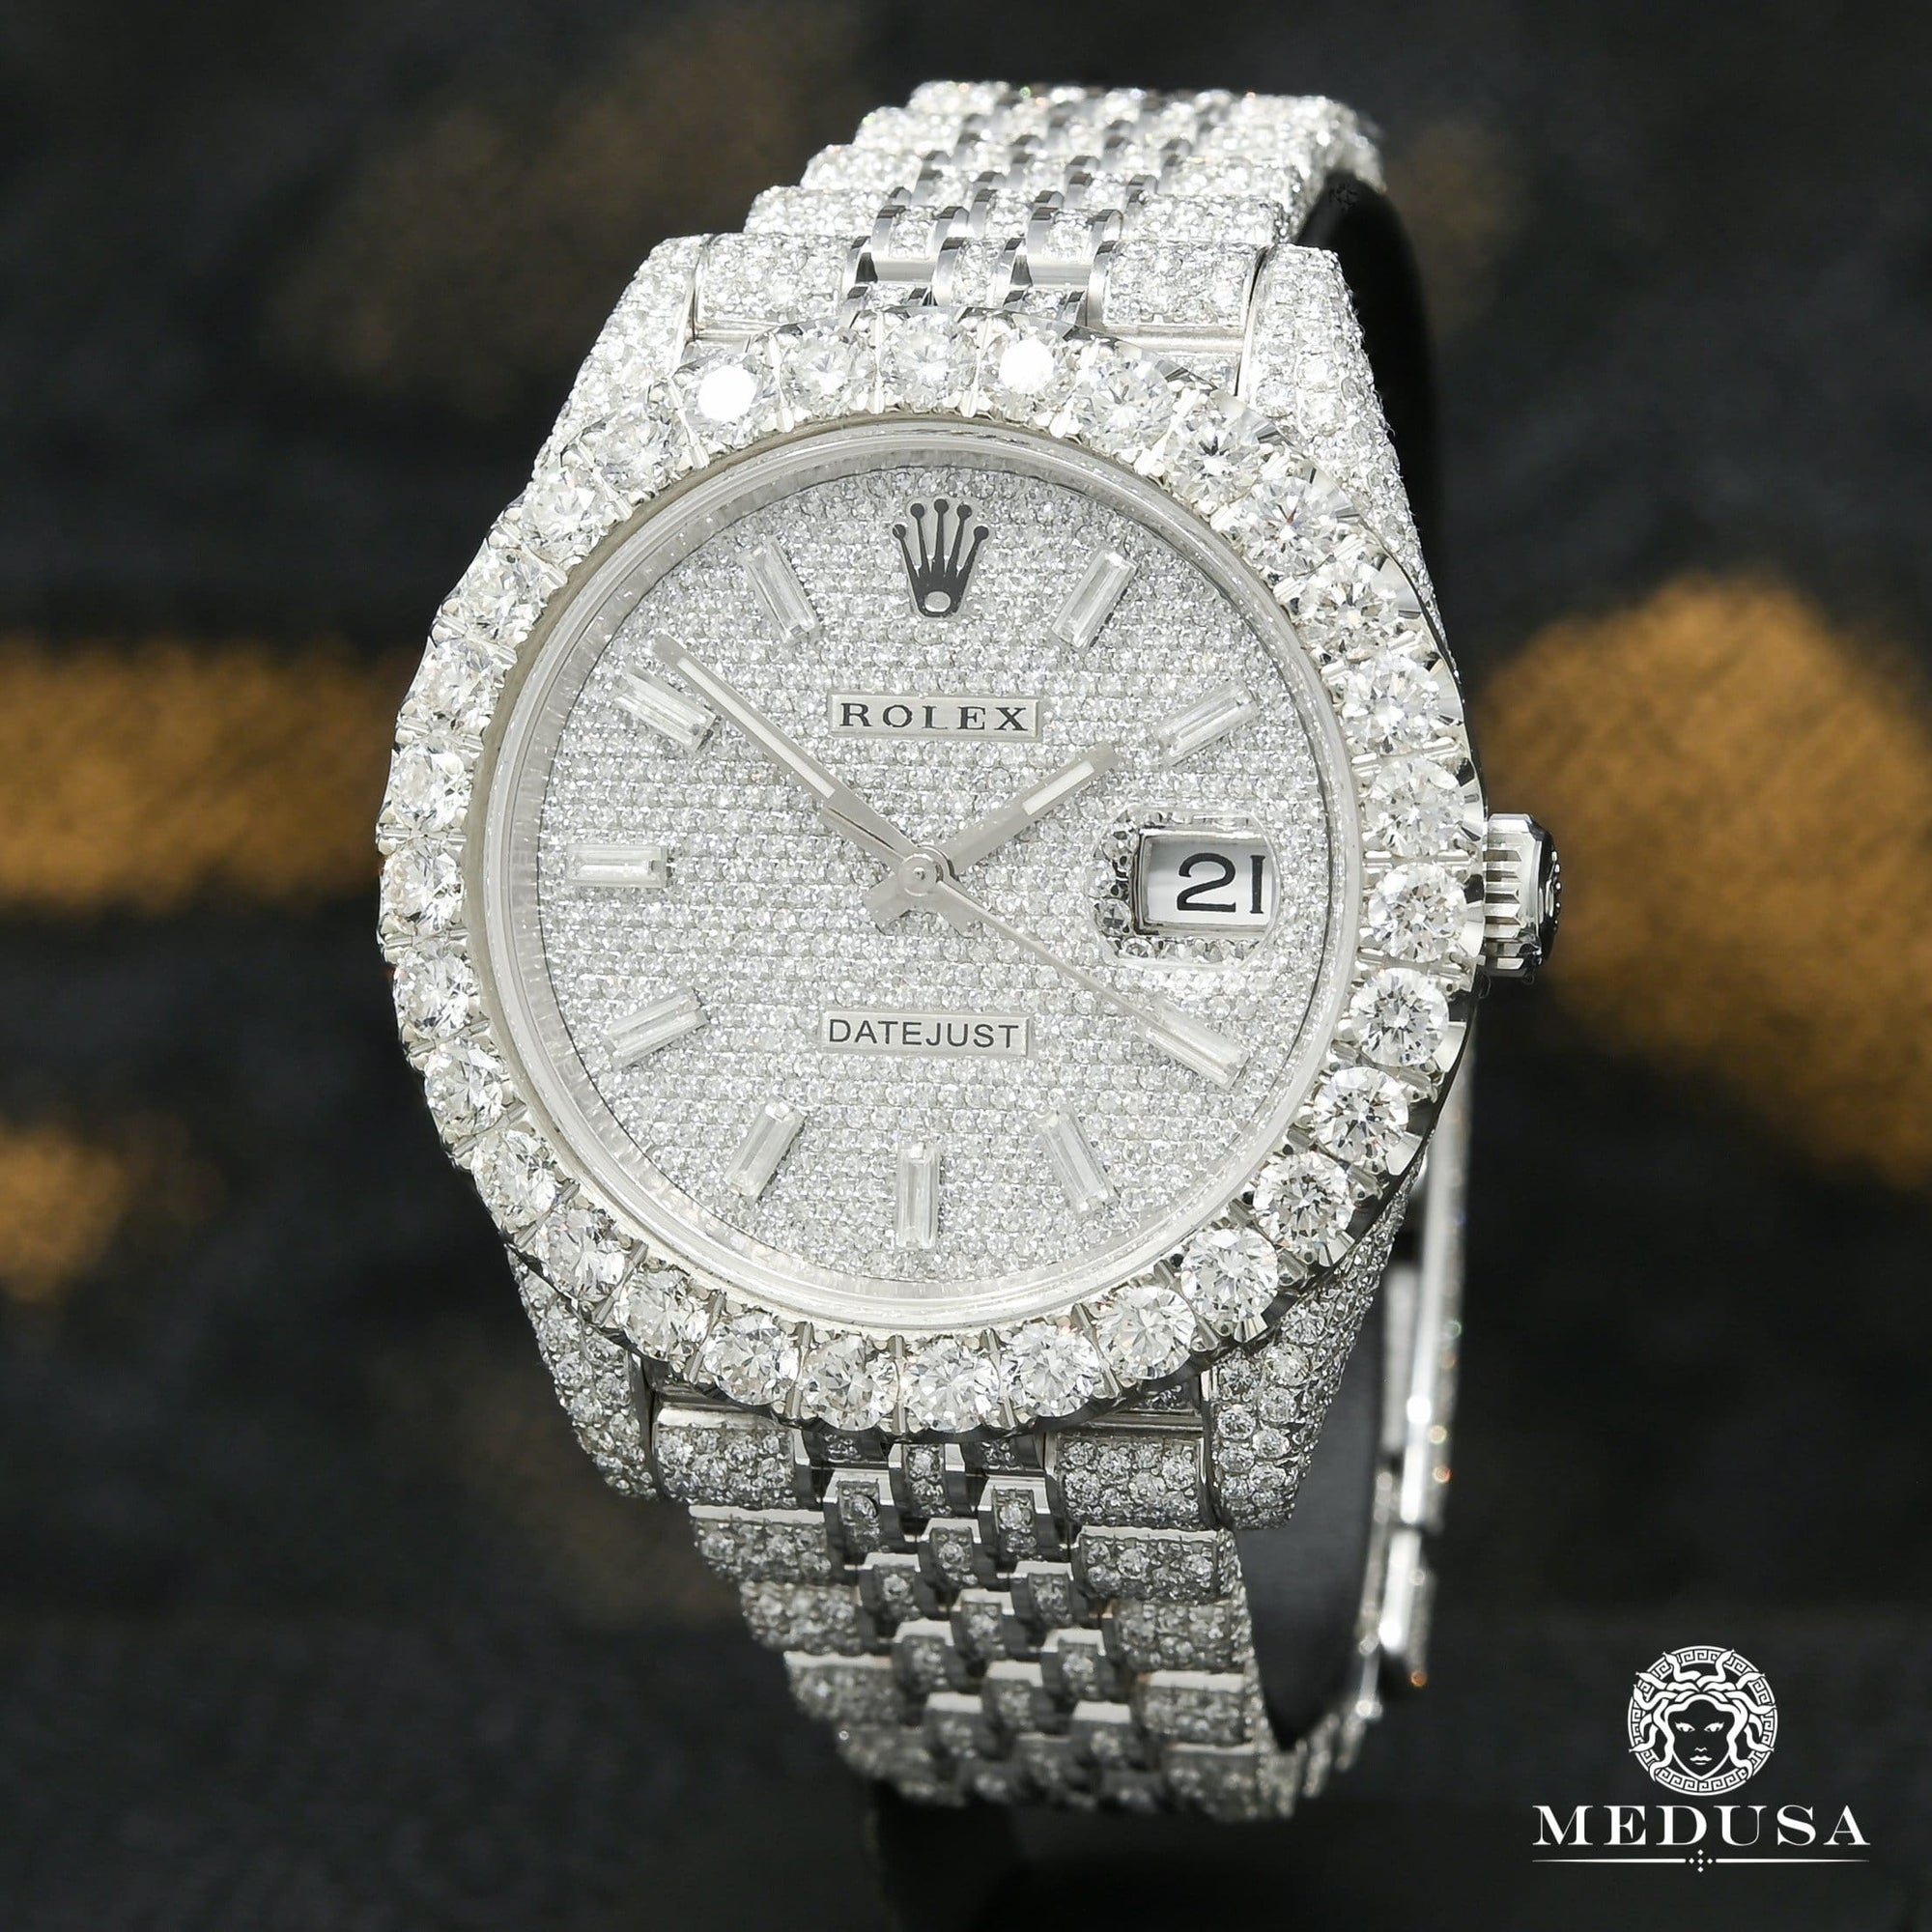 Rolex watch | Rolex Datejust Men's Watch 41mm - Jubilee Full Honeycomb Baguette Stainless